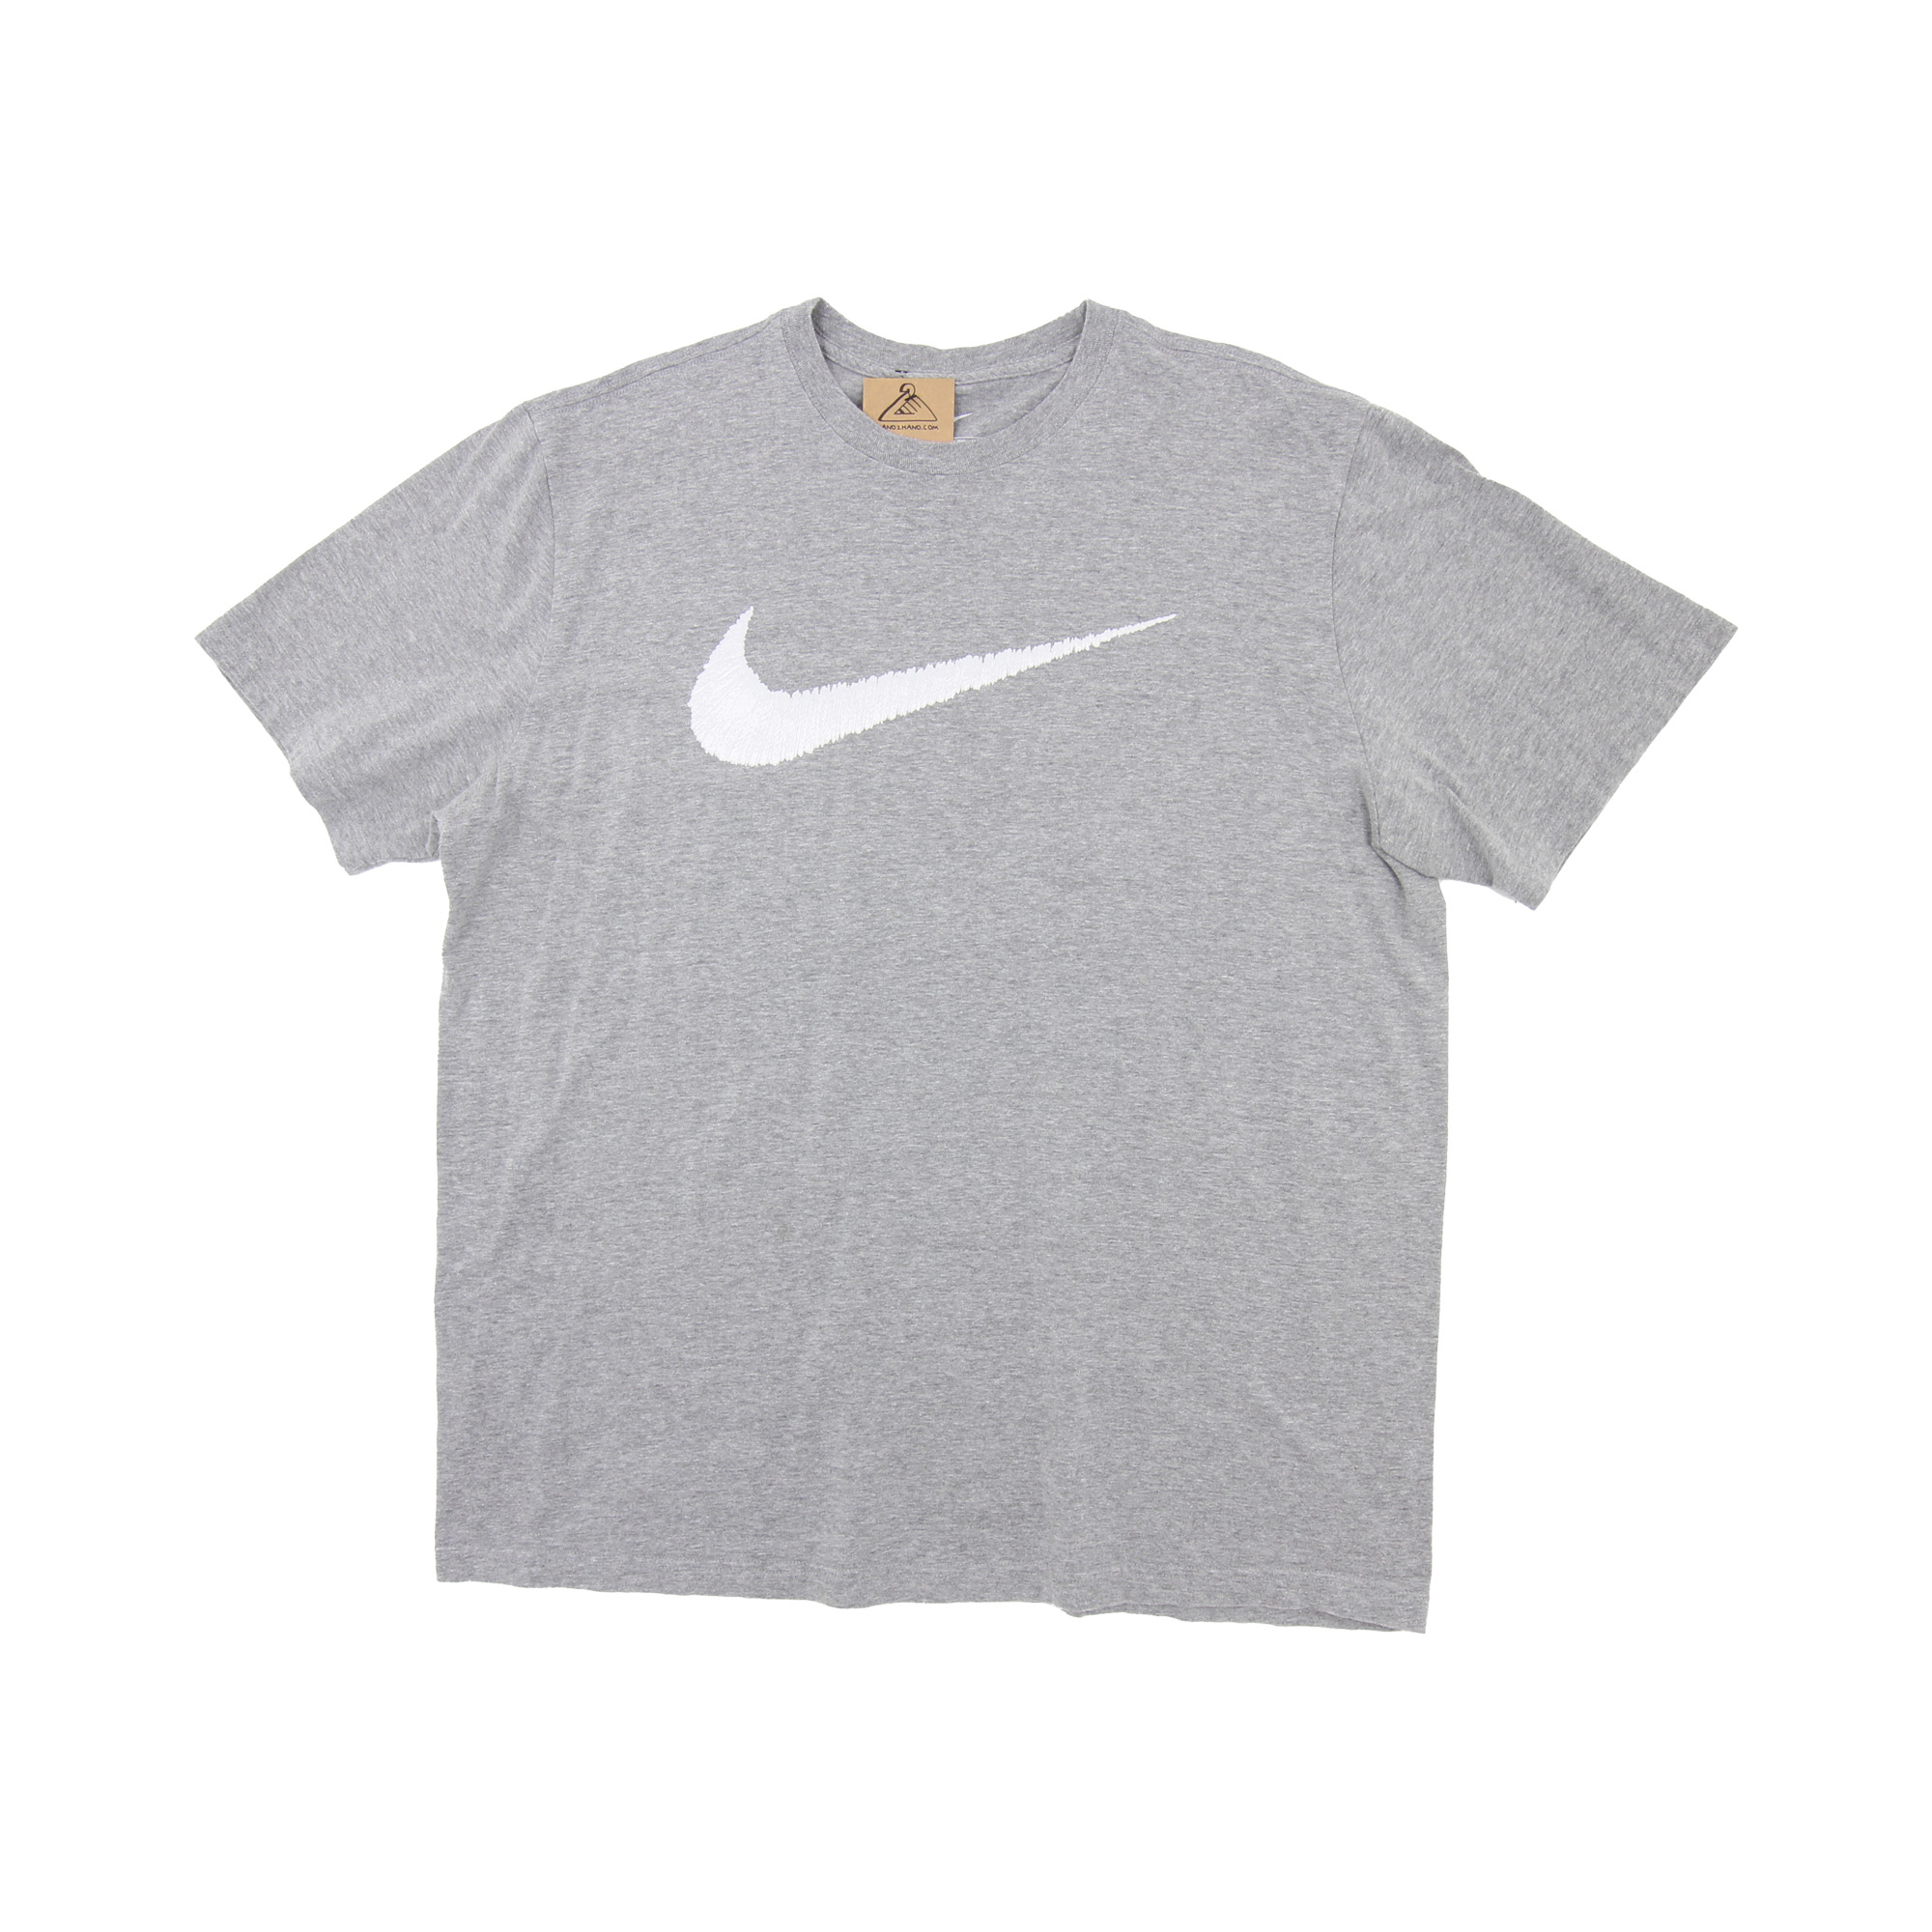 Nike Center Logo T-Shirt -  XL